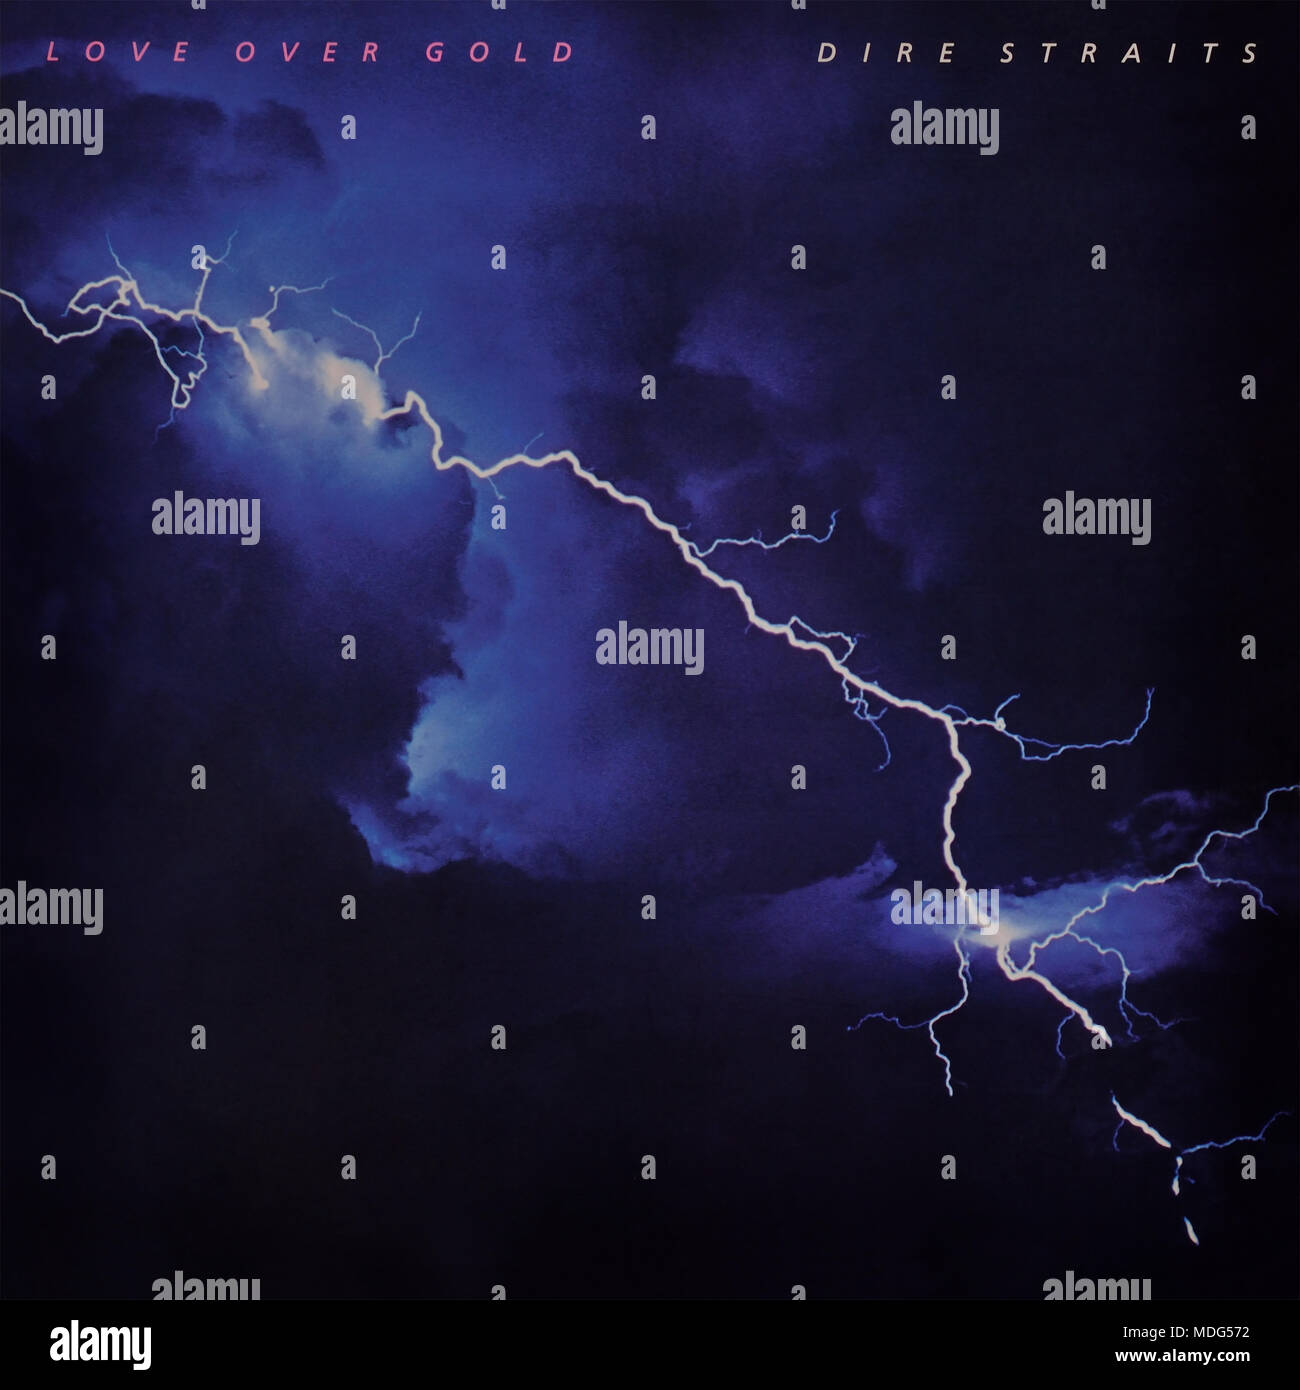 Dire Straits - portada original del álbum de vinilo - Love Over Gold - 1982 Foto de stock